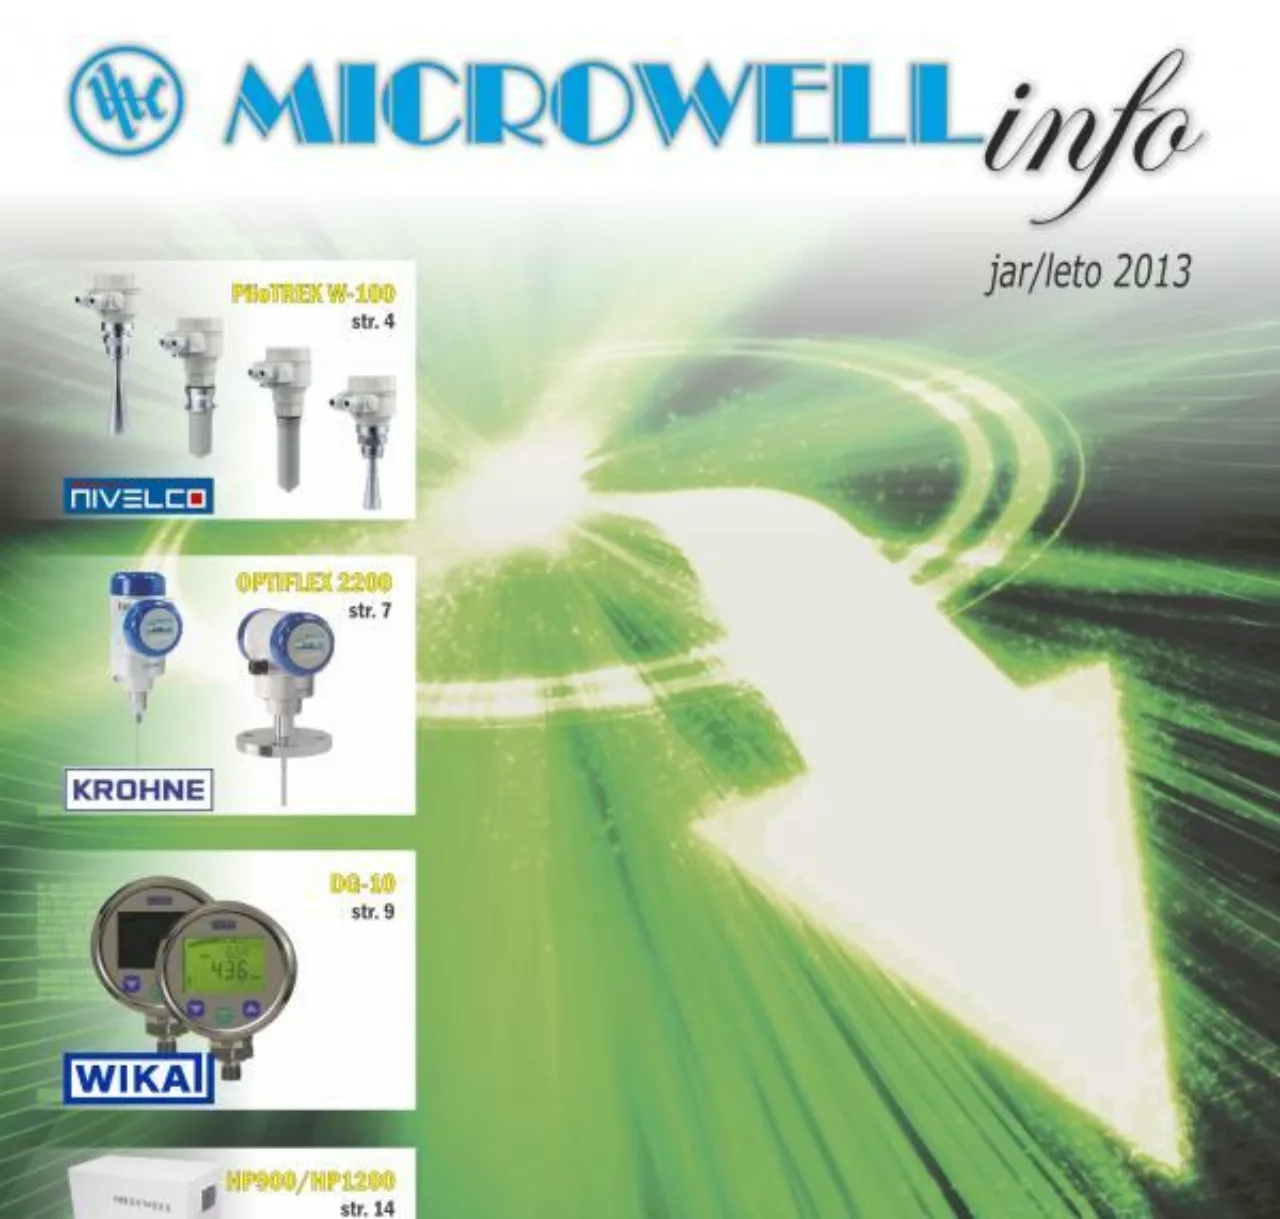 Microwell INFO jar-leto 2013 | Blog - Microwell